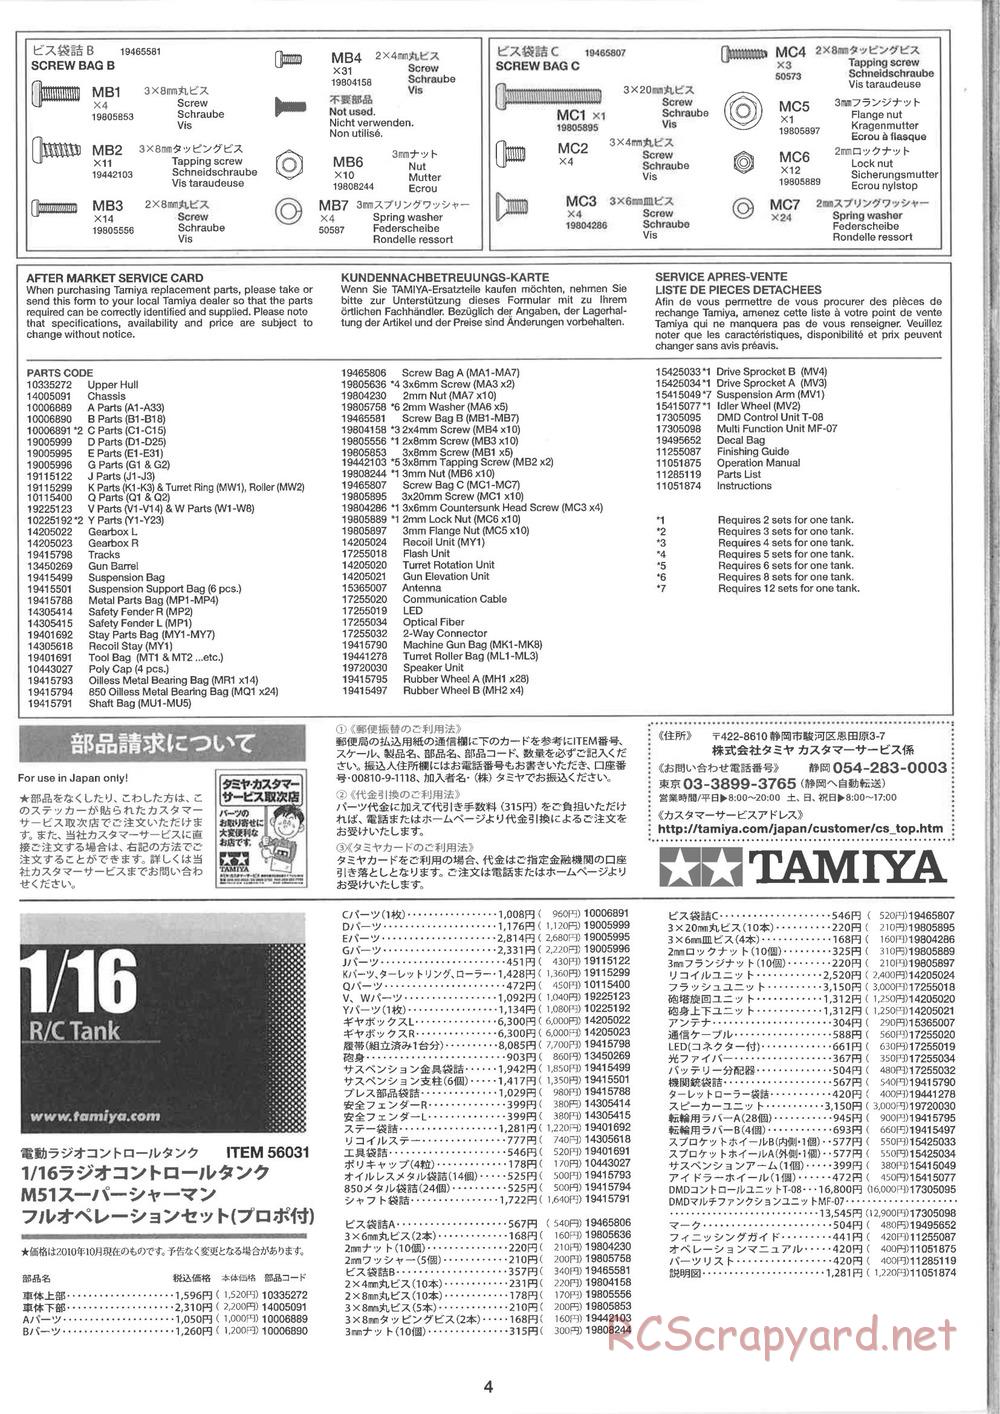 Tamiya - Super Sherman M-51 - 1/16 Scale Chassis - Manual - Page 24